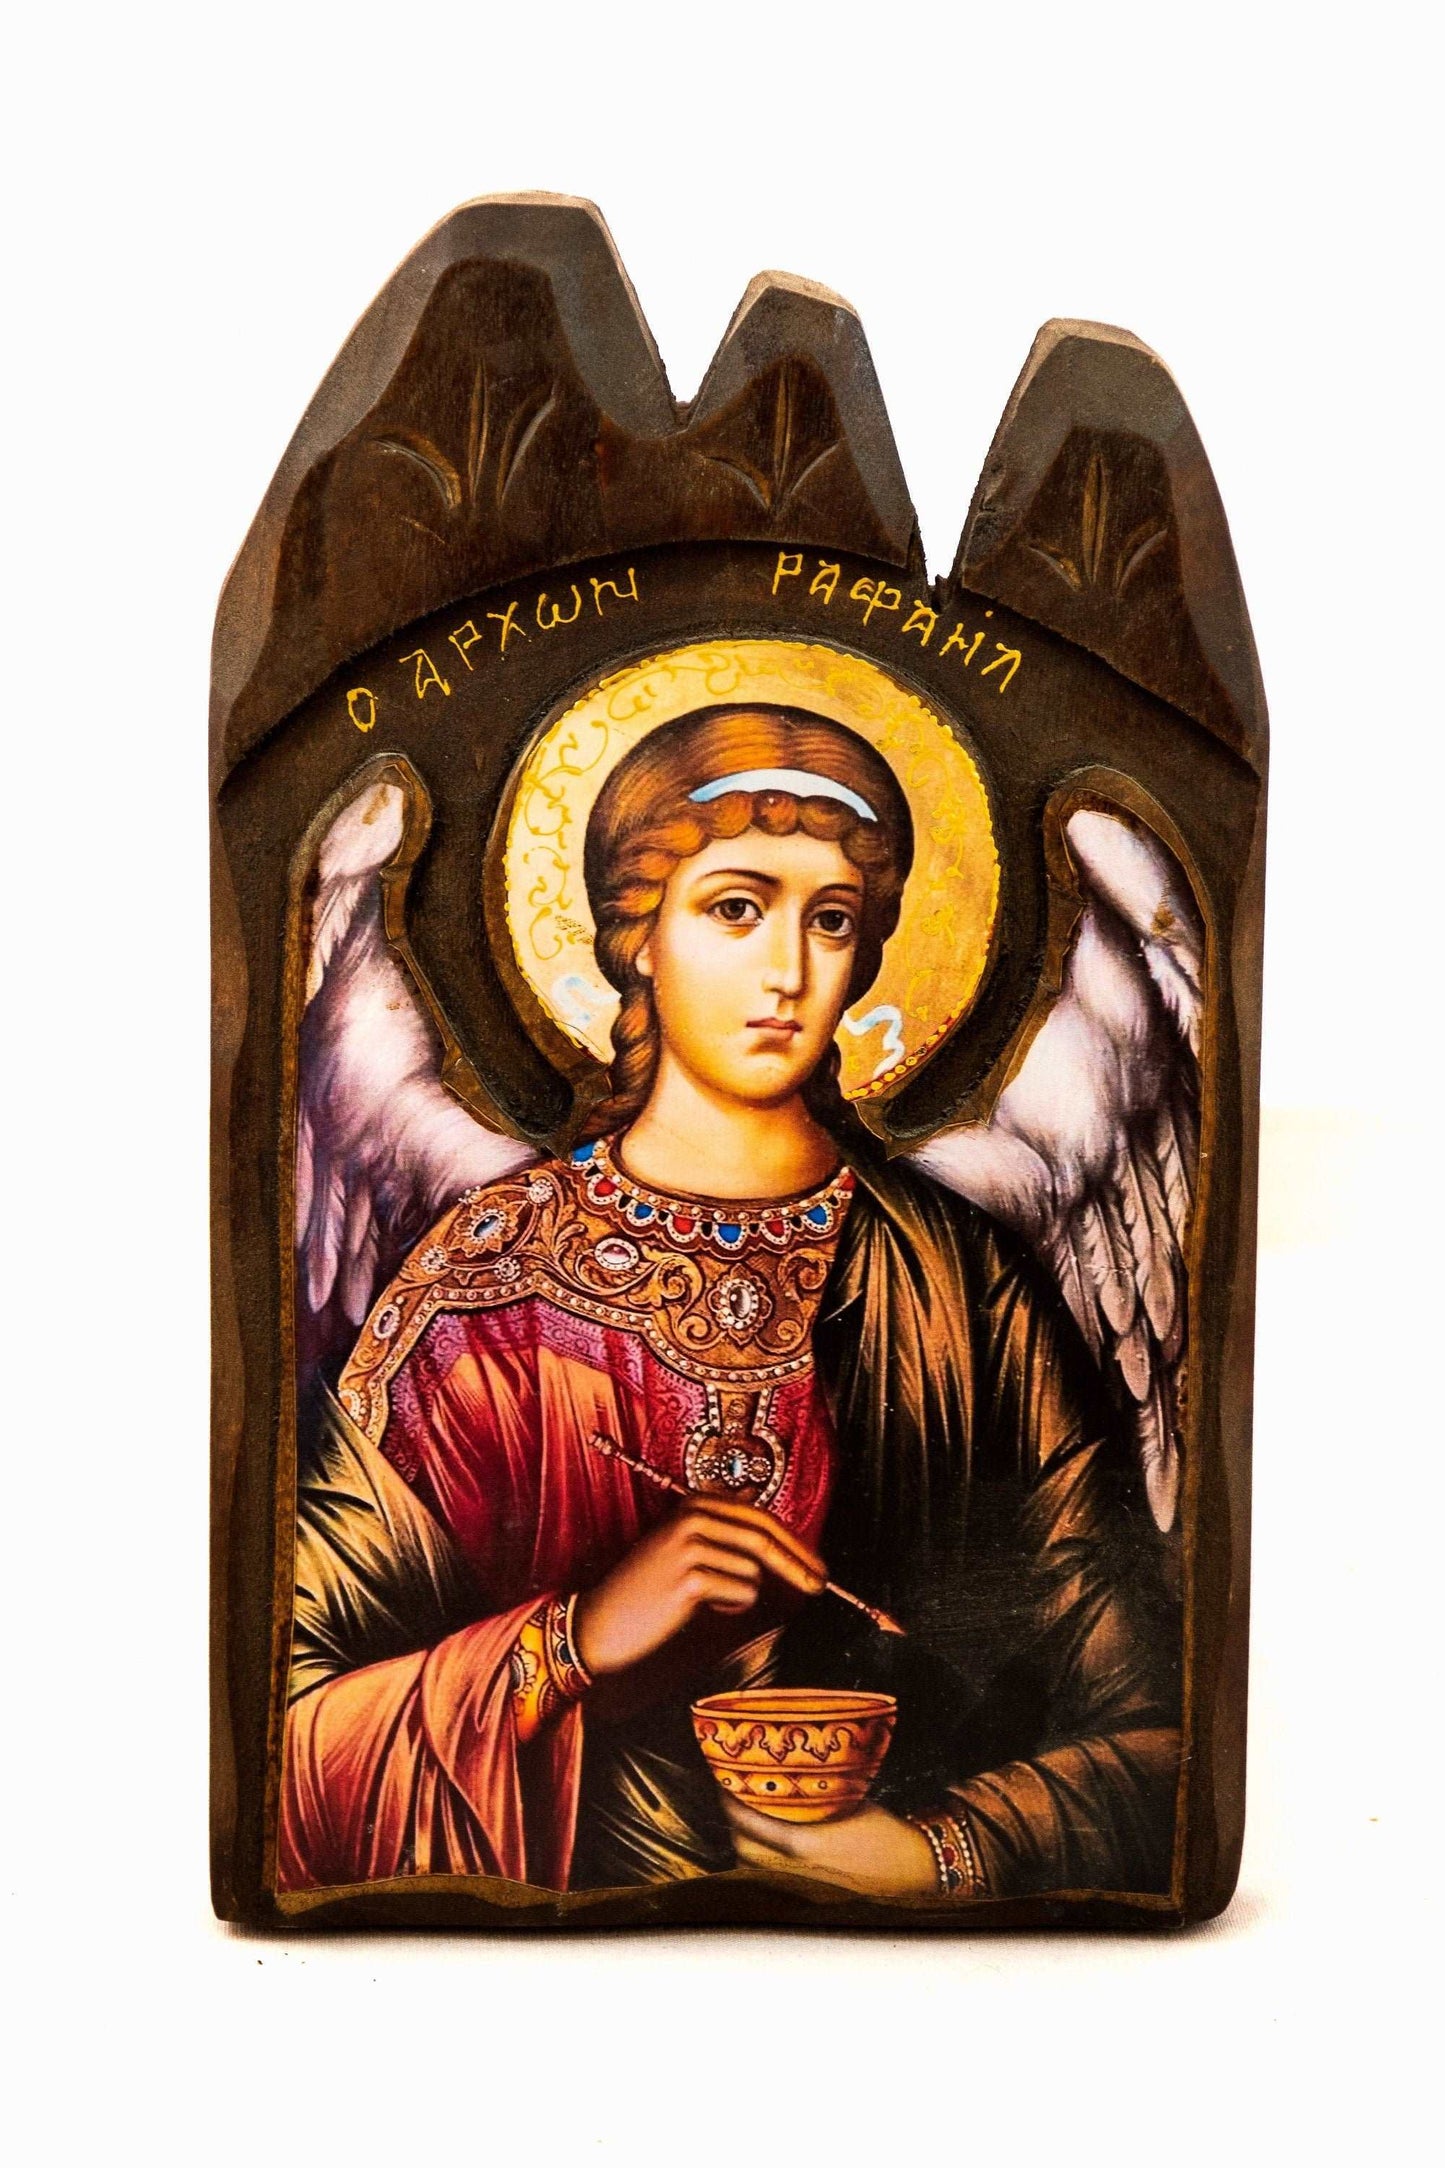 Archangel Raphael icon, Handmade Greek Orthodox icon, Byzantine art wall hanging wood plaque 38x25cm, religious decor TheHolyArt